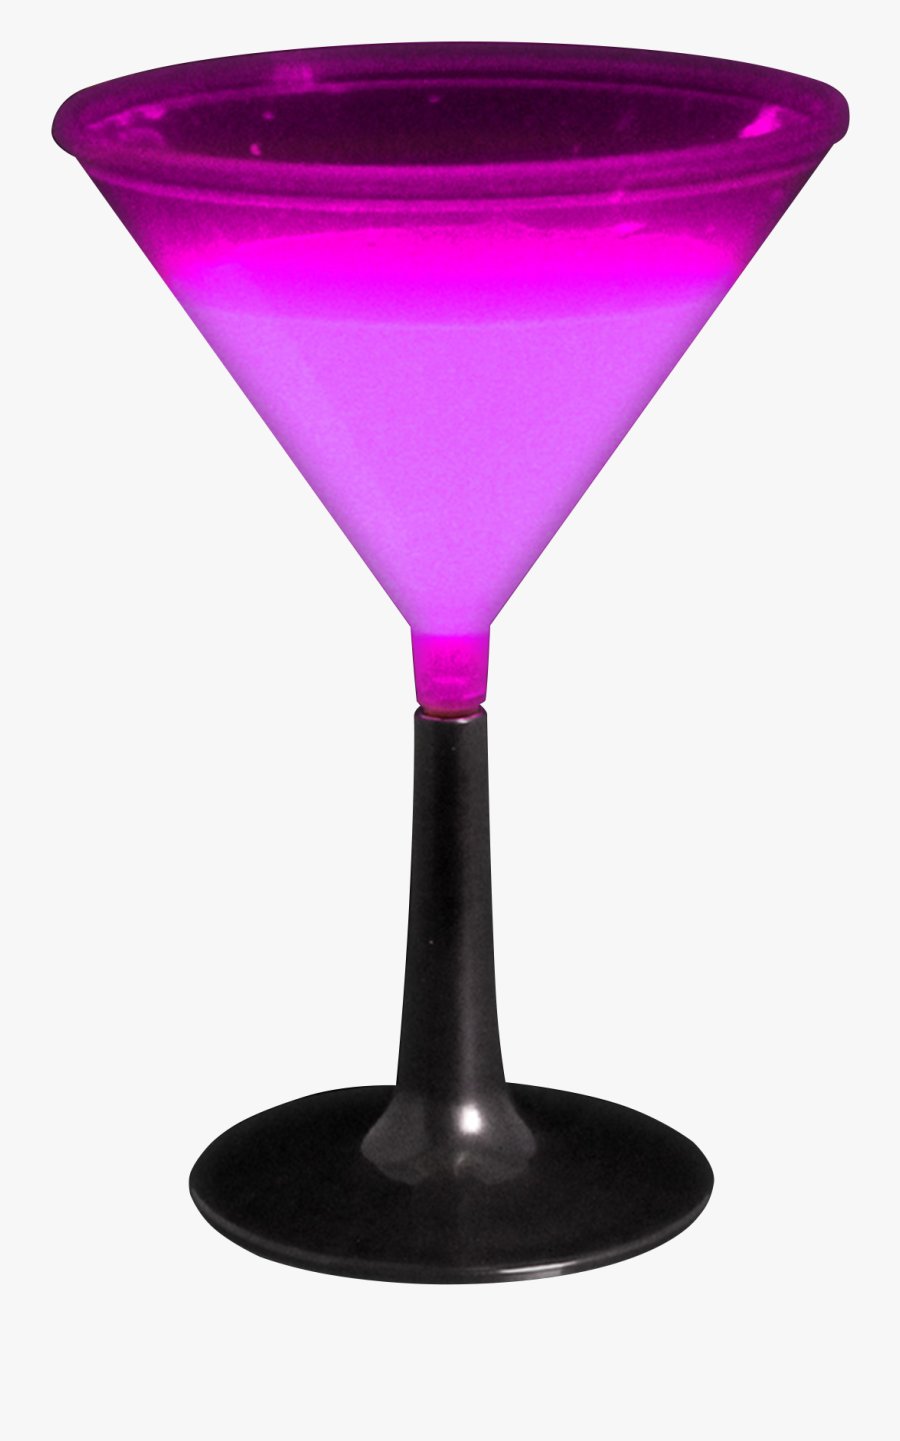 Pink Martini Glass Png - Martini Glass, Transparent Clipart